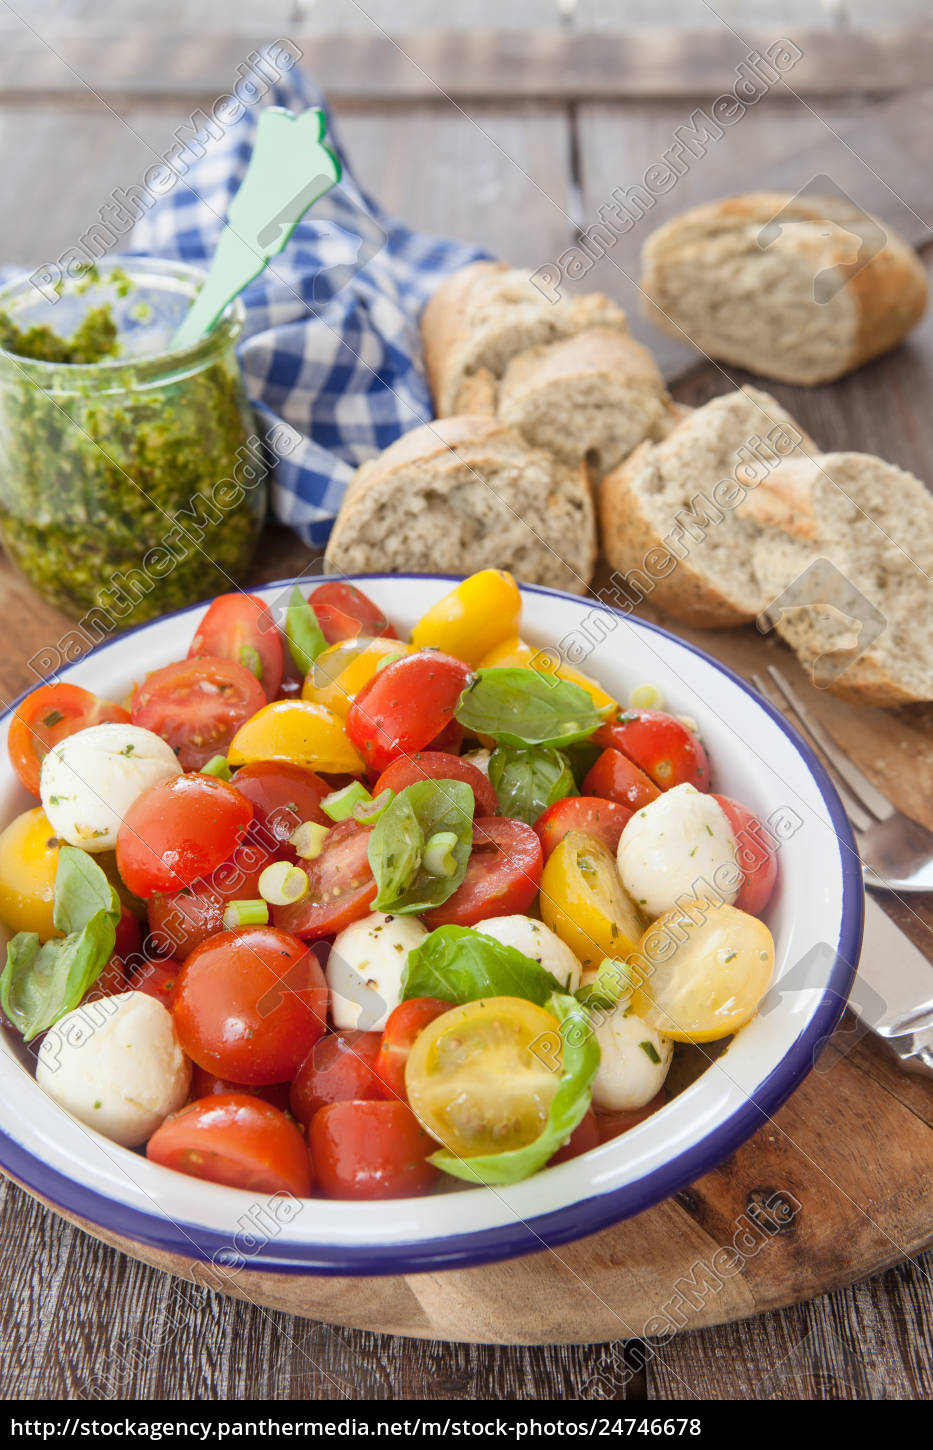 Bunter Tomatensalat mit Mozzarella - Stock Photo - #24746678 ...